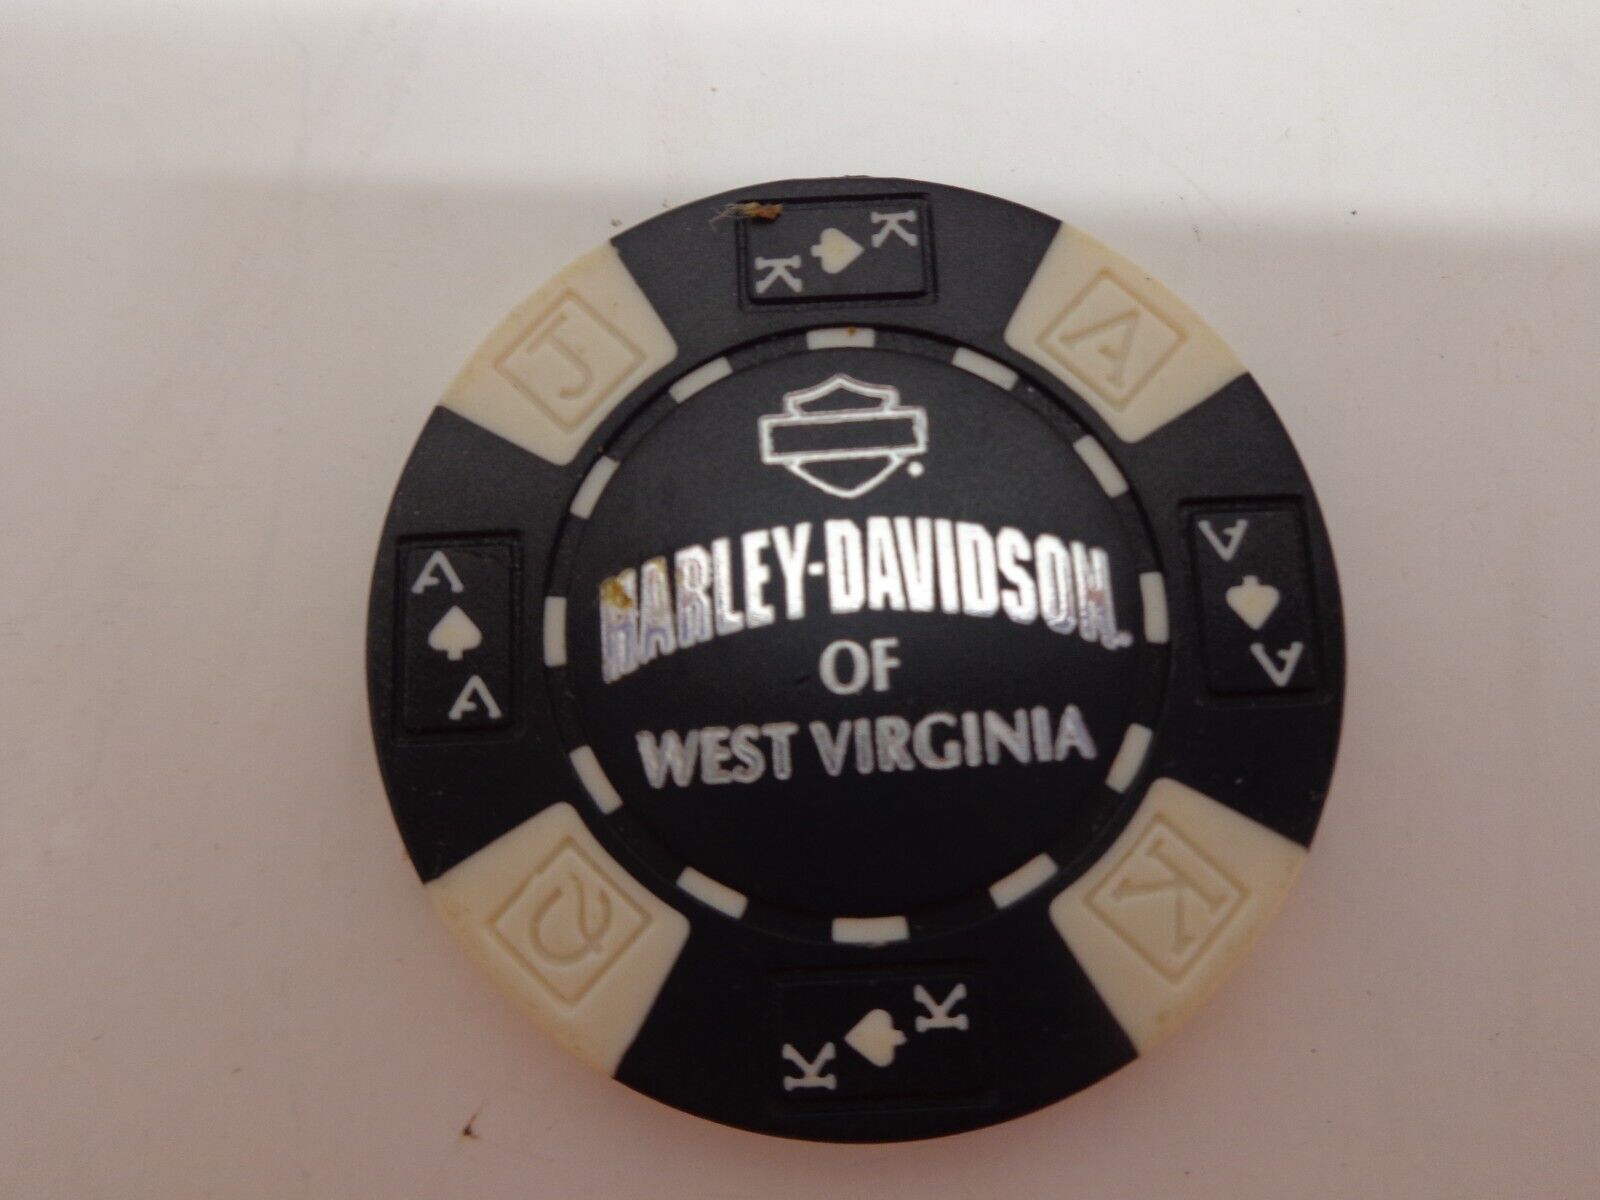 Harley Davidson of West Virginia Dealership 35th Anniversary Black Poker Chip